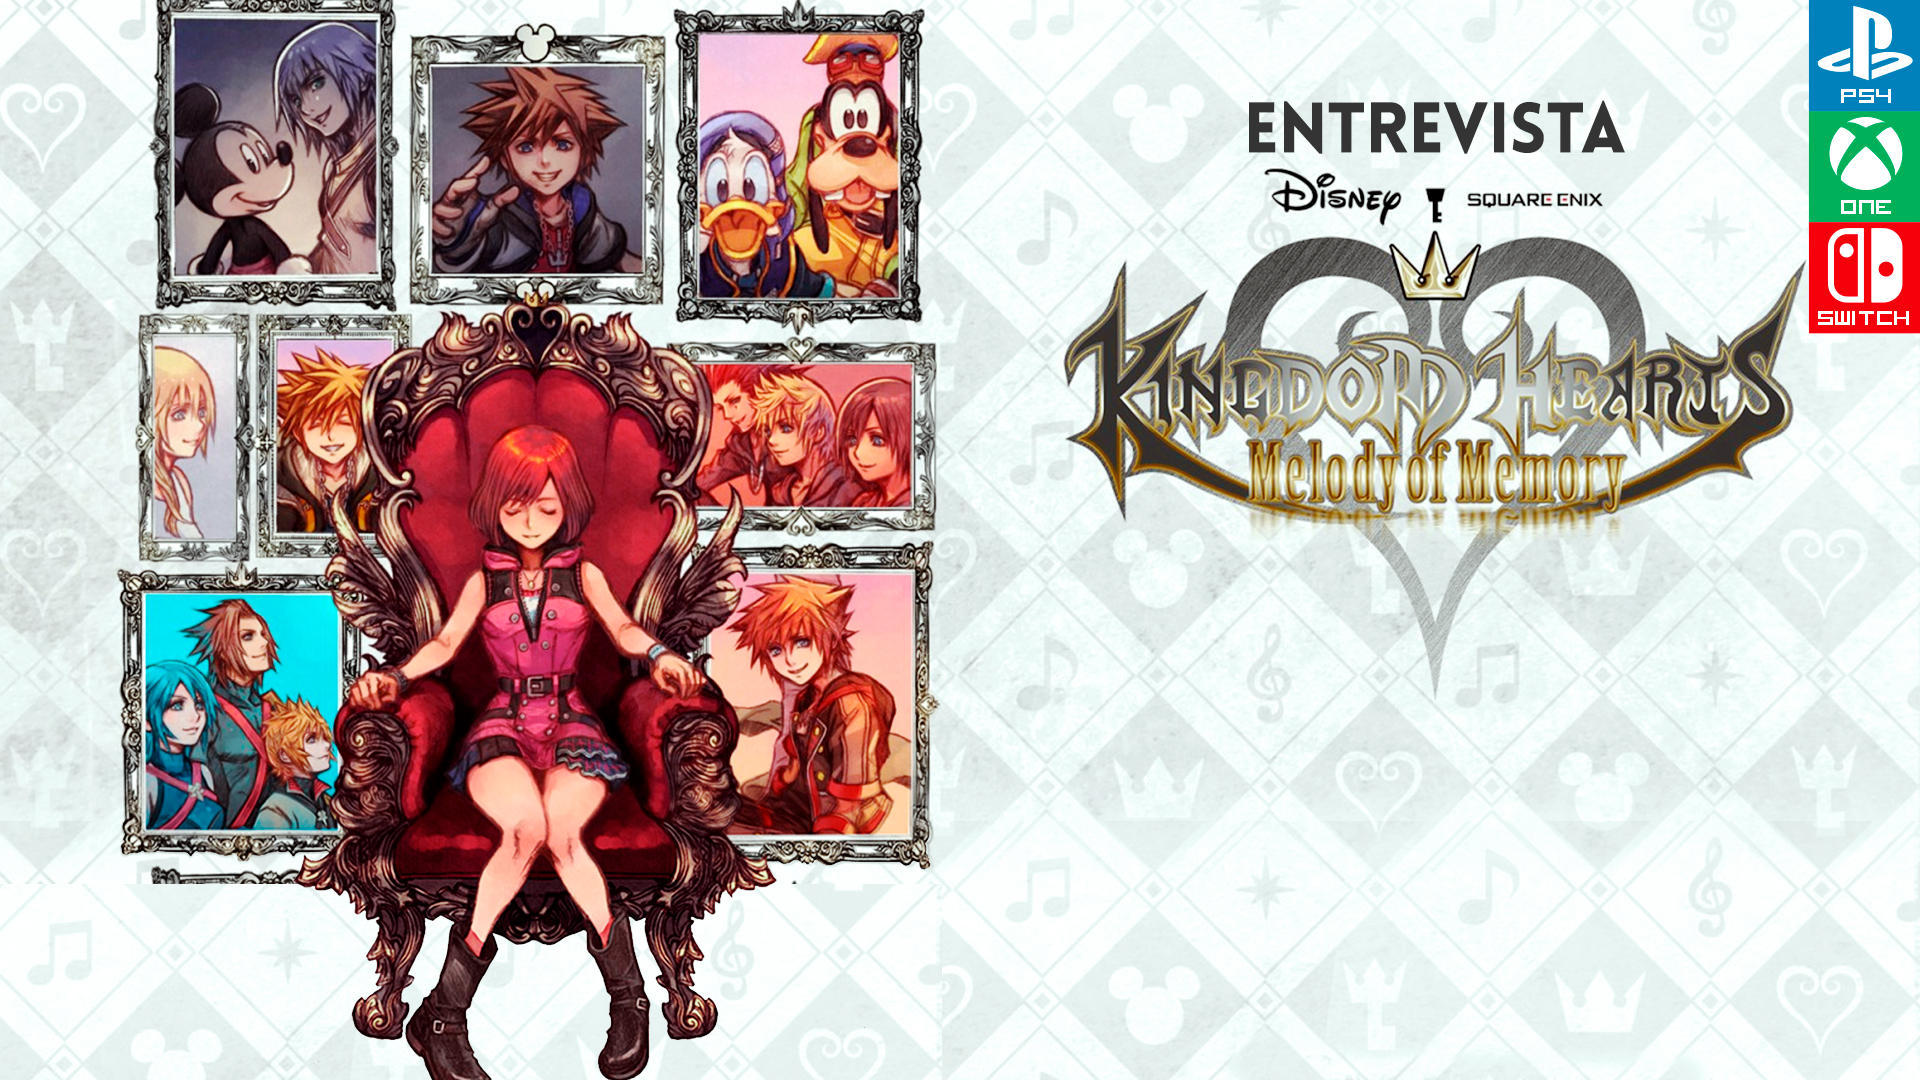 Entrevista Kingdom Hearts: Melody of Memory